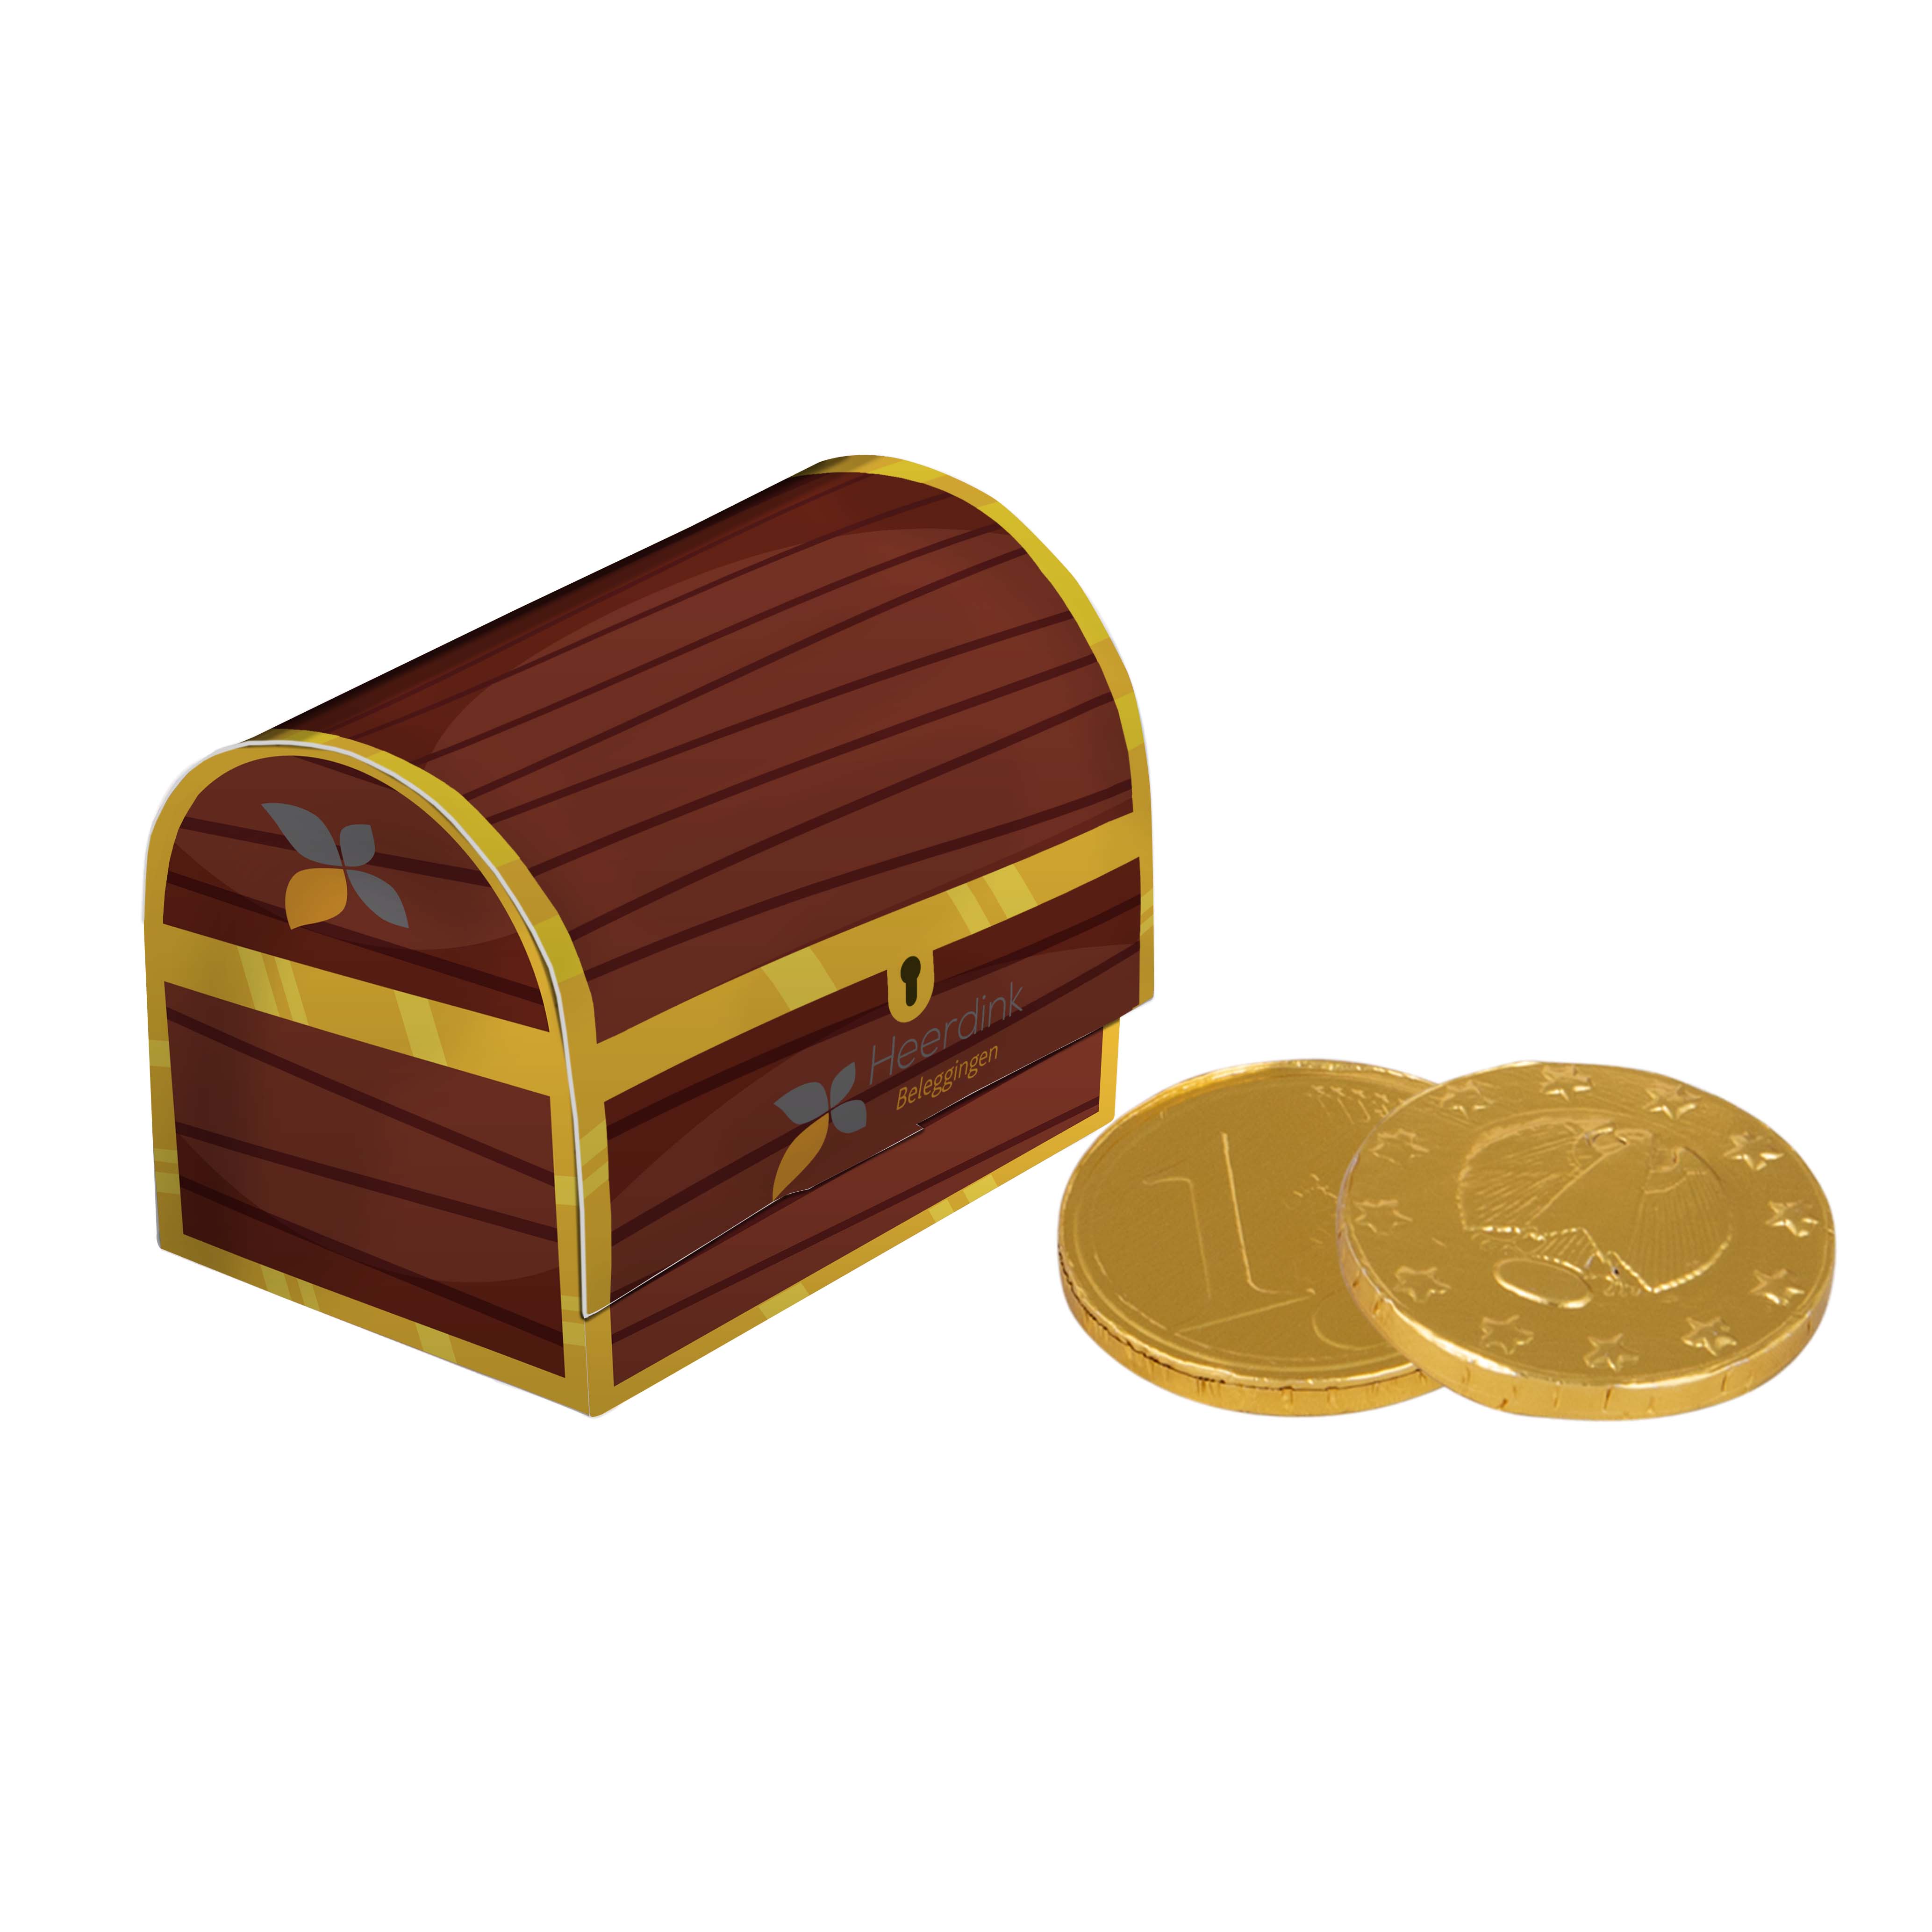 Caja de Monedas de Chocolate Impresas a Color Completo - Santa Eulalia de Gállego